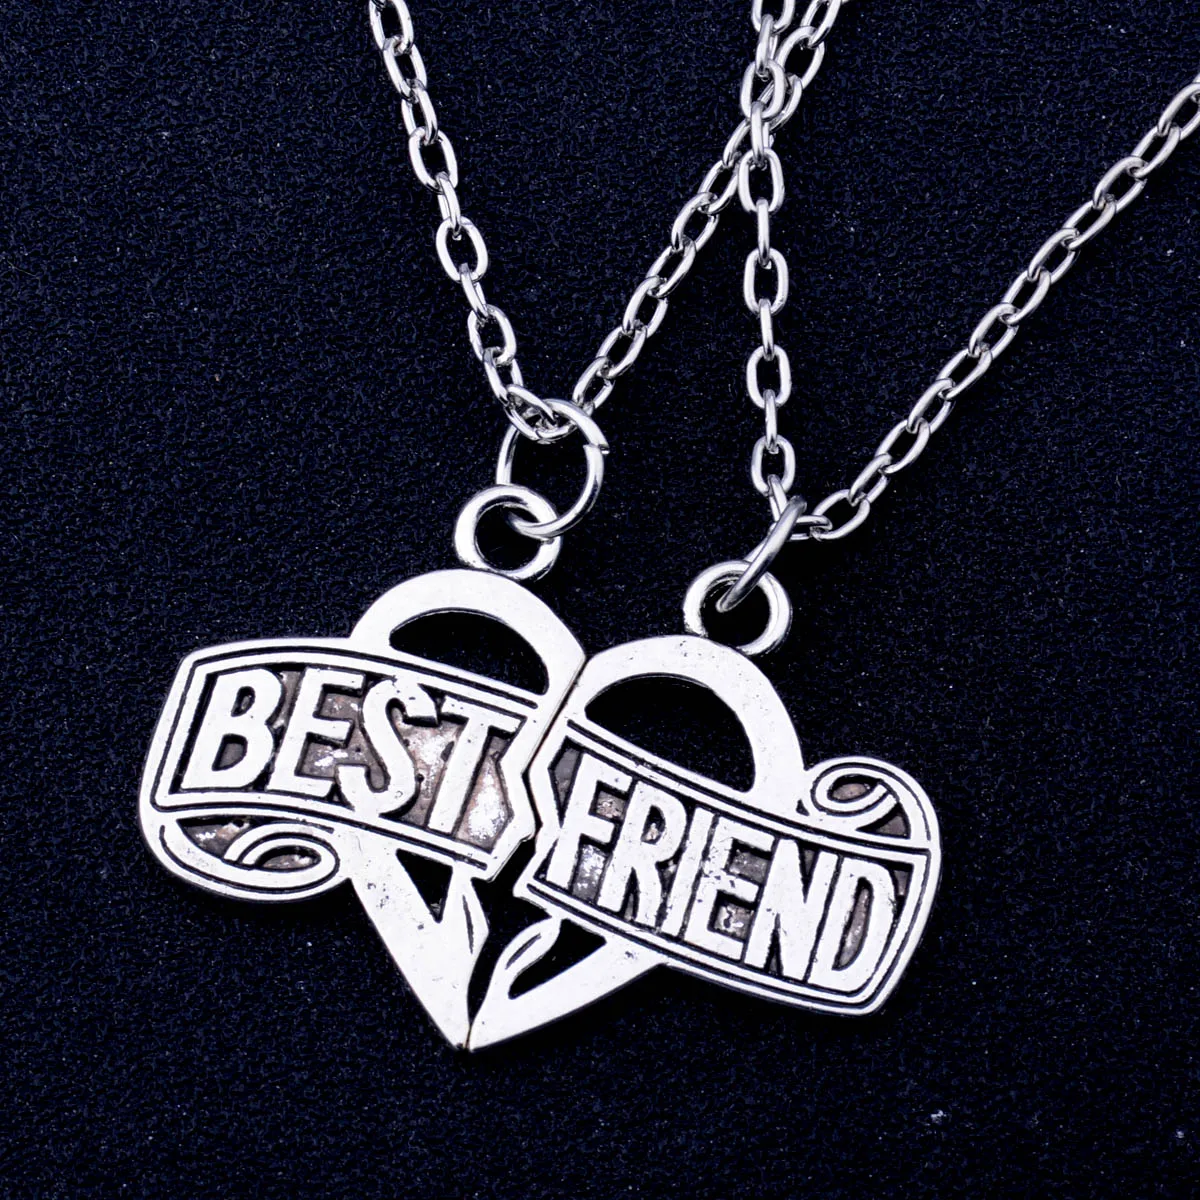 Best Friends Pendant Necklace Broken Heart Friendship Gifts Chain Jewellery BFF 